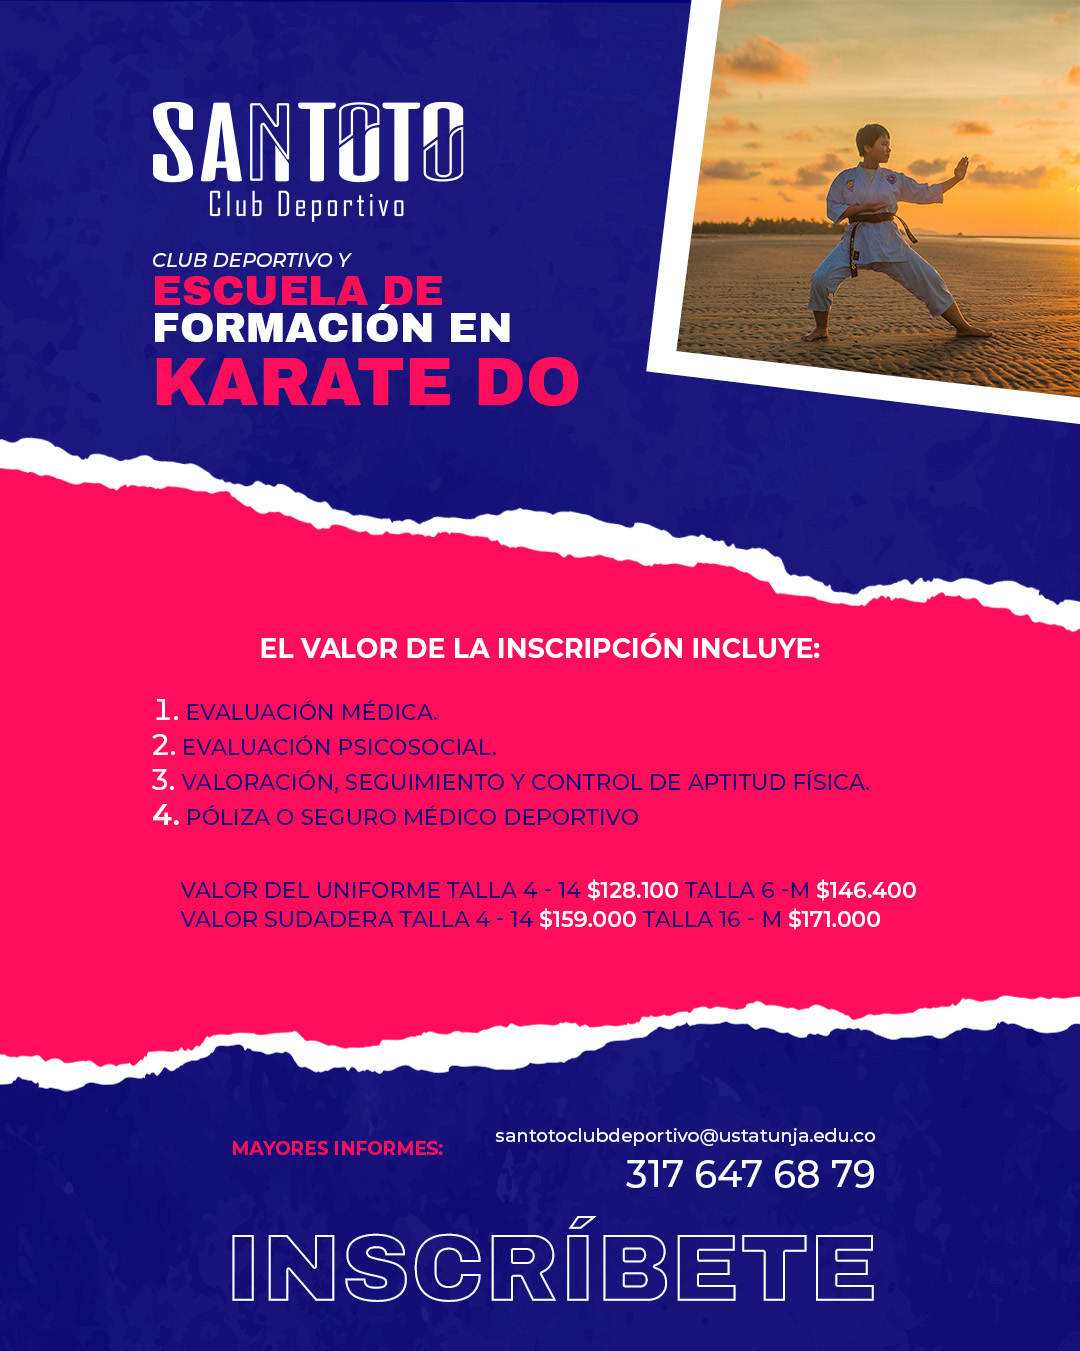 KarateDo_Club_Deportivo_Santoto_Tunja_1